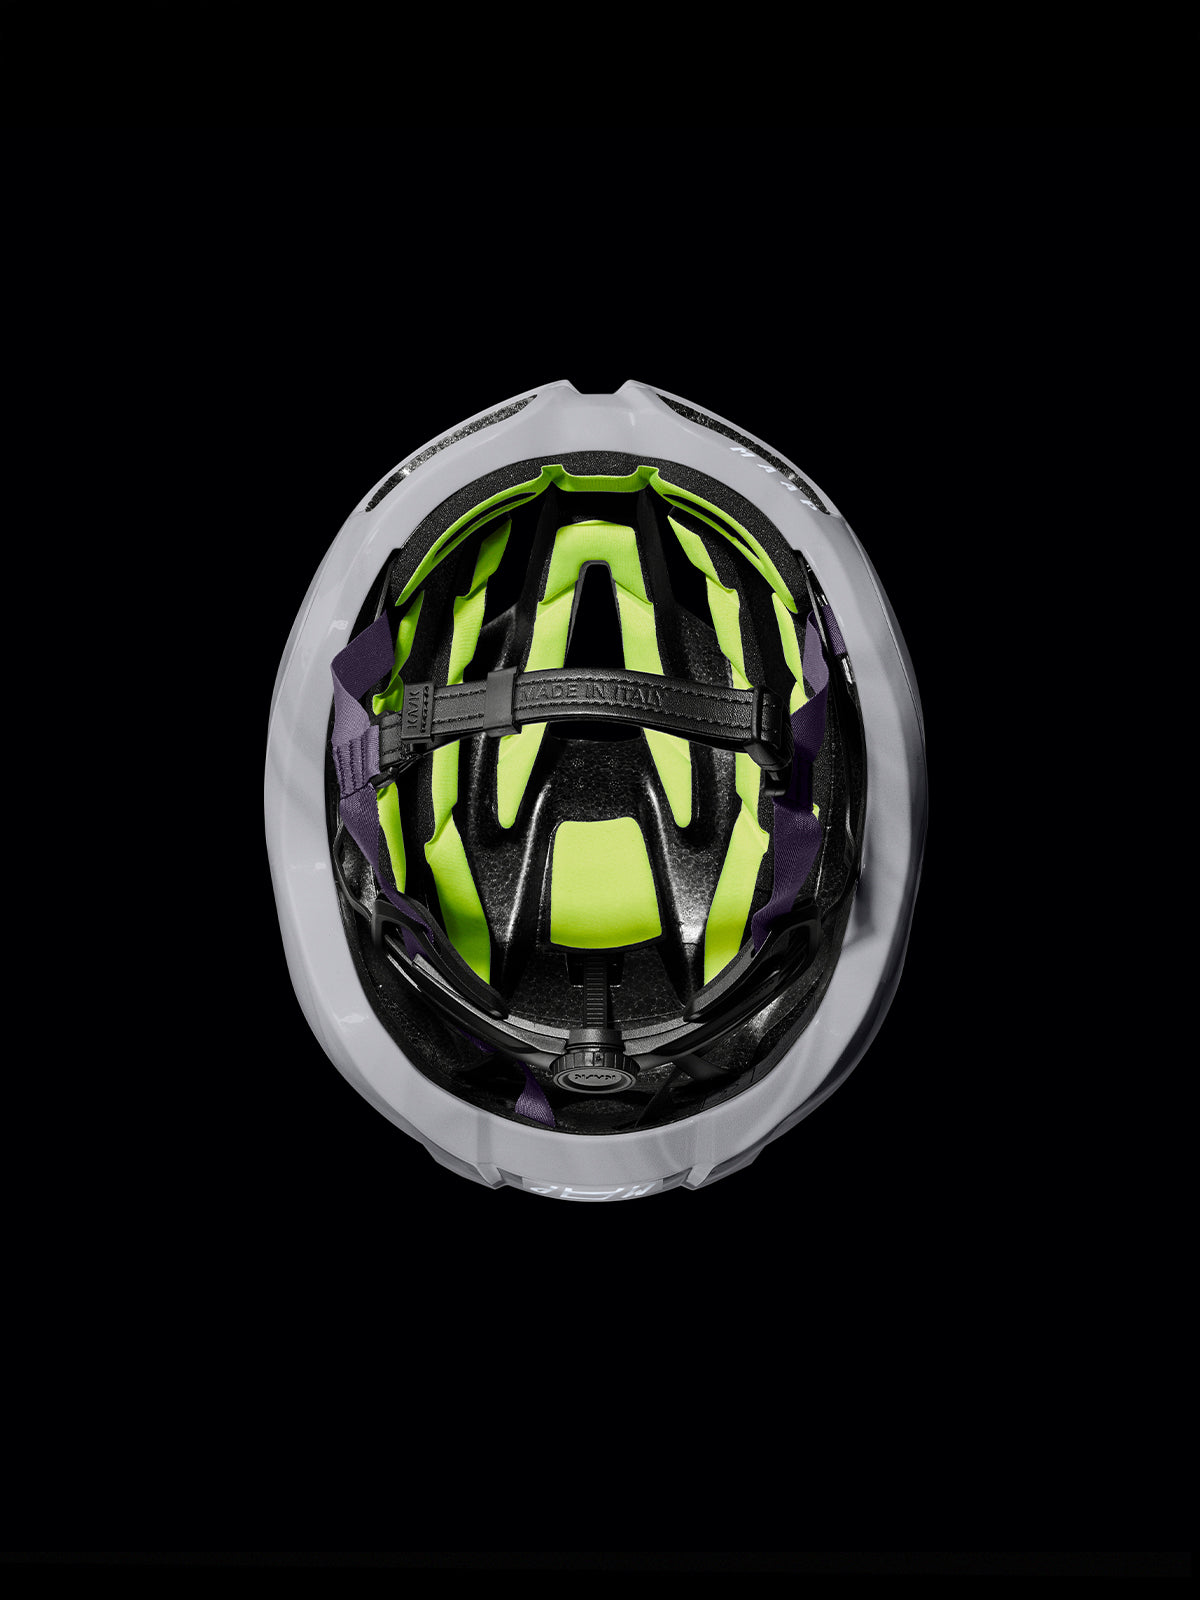 MAAP X Kask Protone Icon Helmet - FOG